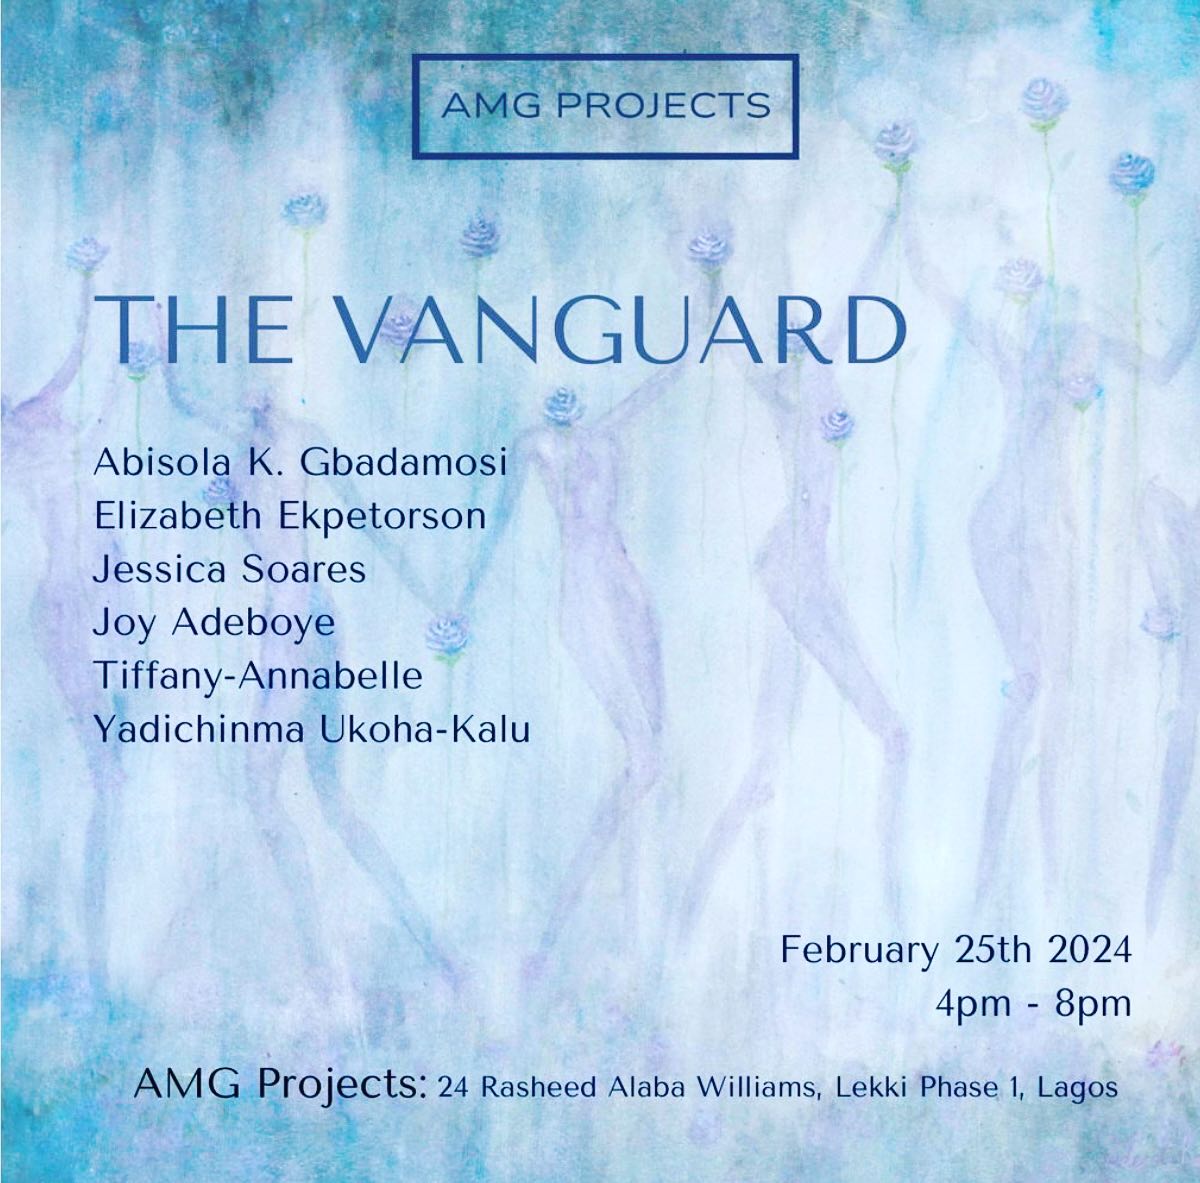 THE VANGUARD Exhibition Poster